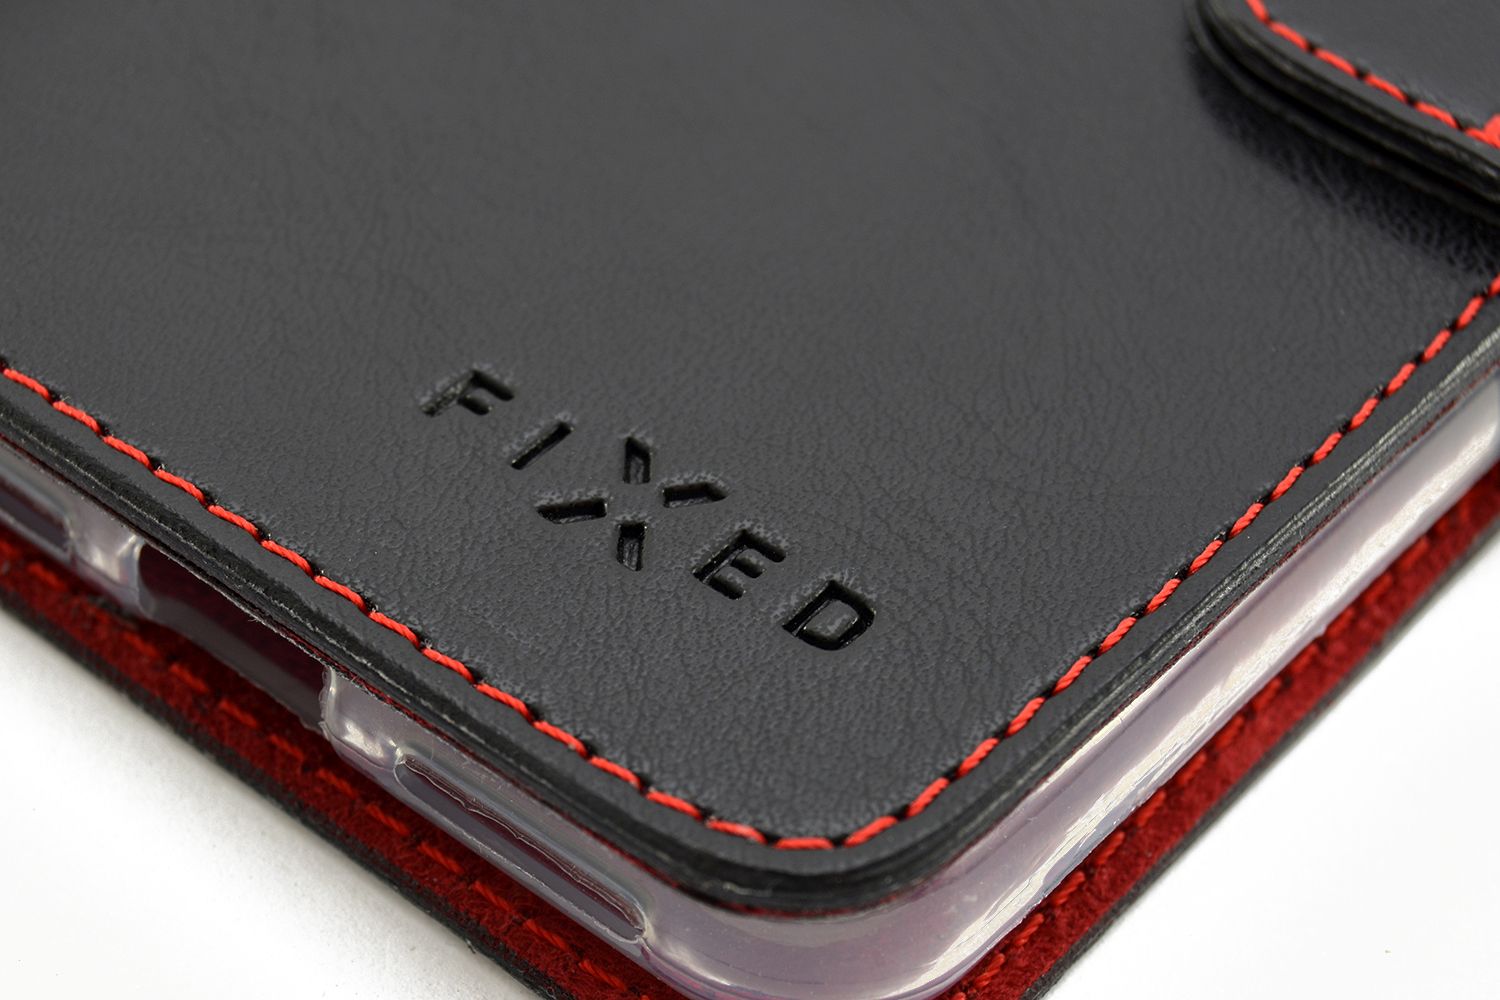 FIXED FIT flipové pouzdro, obal, kryt Apple iPhone 12 Pro Max black